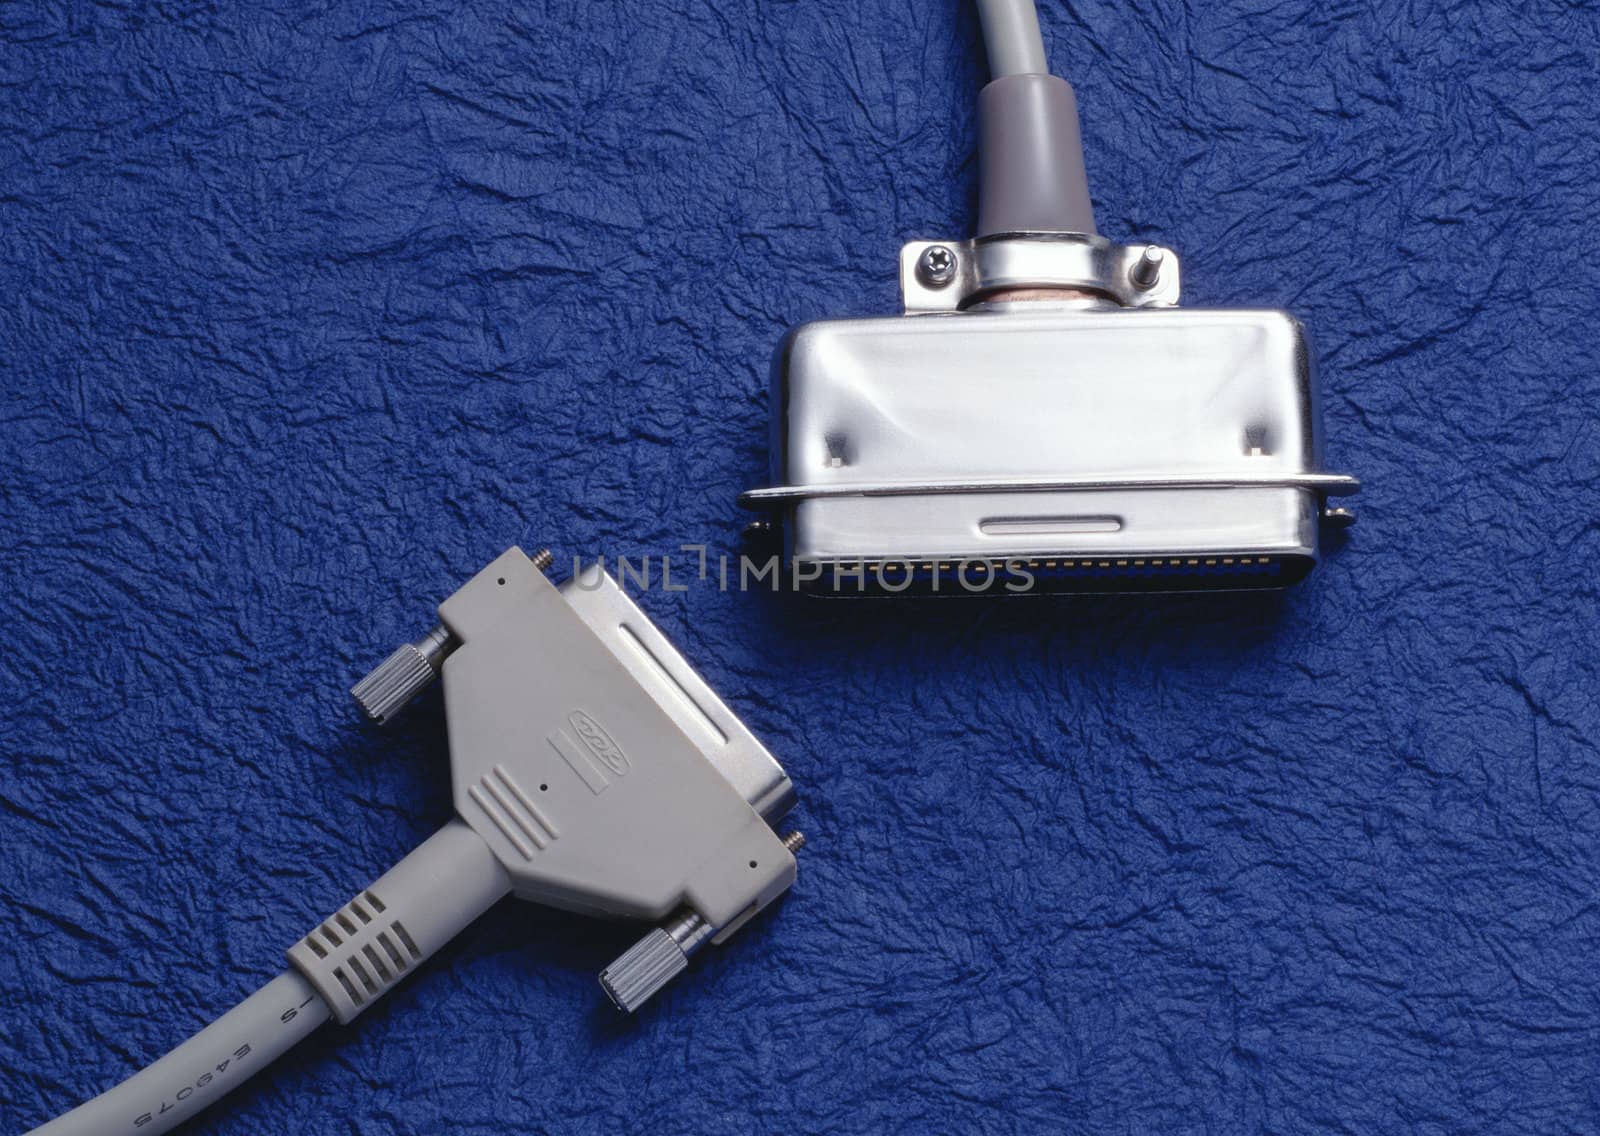 HDMI-DVI monitor connectors